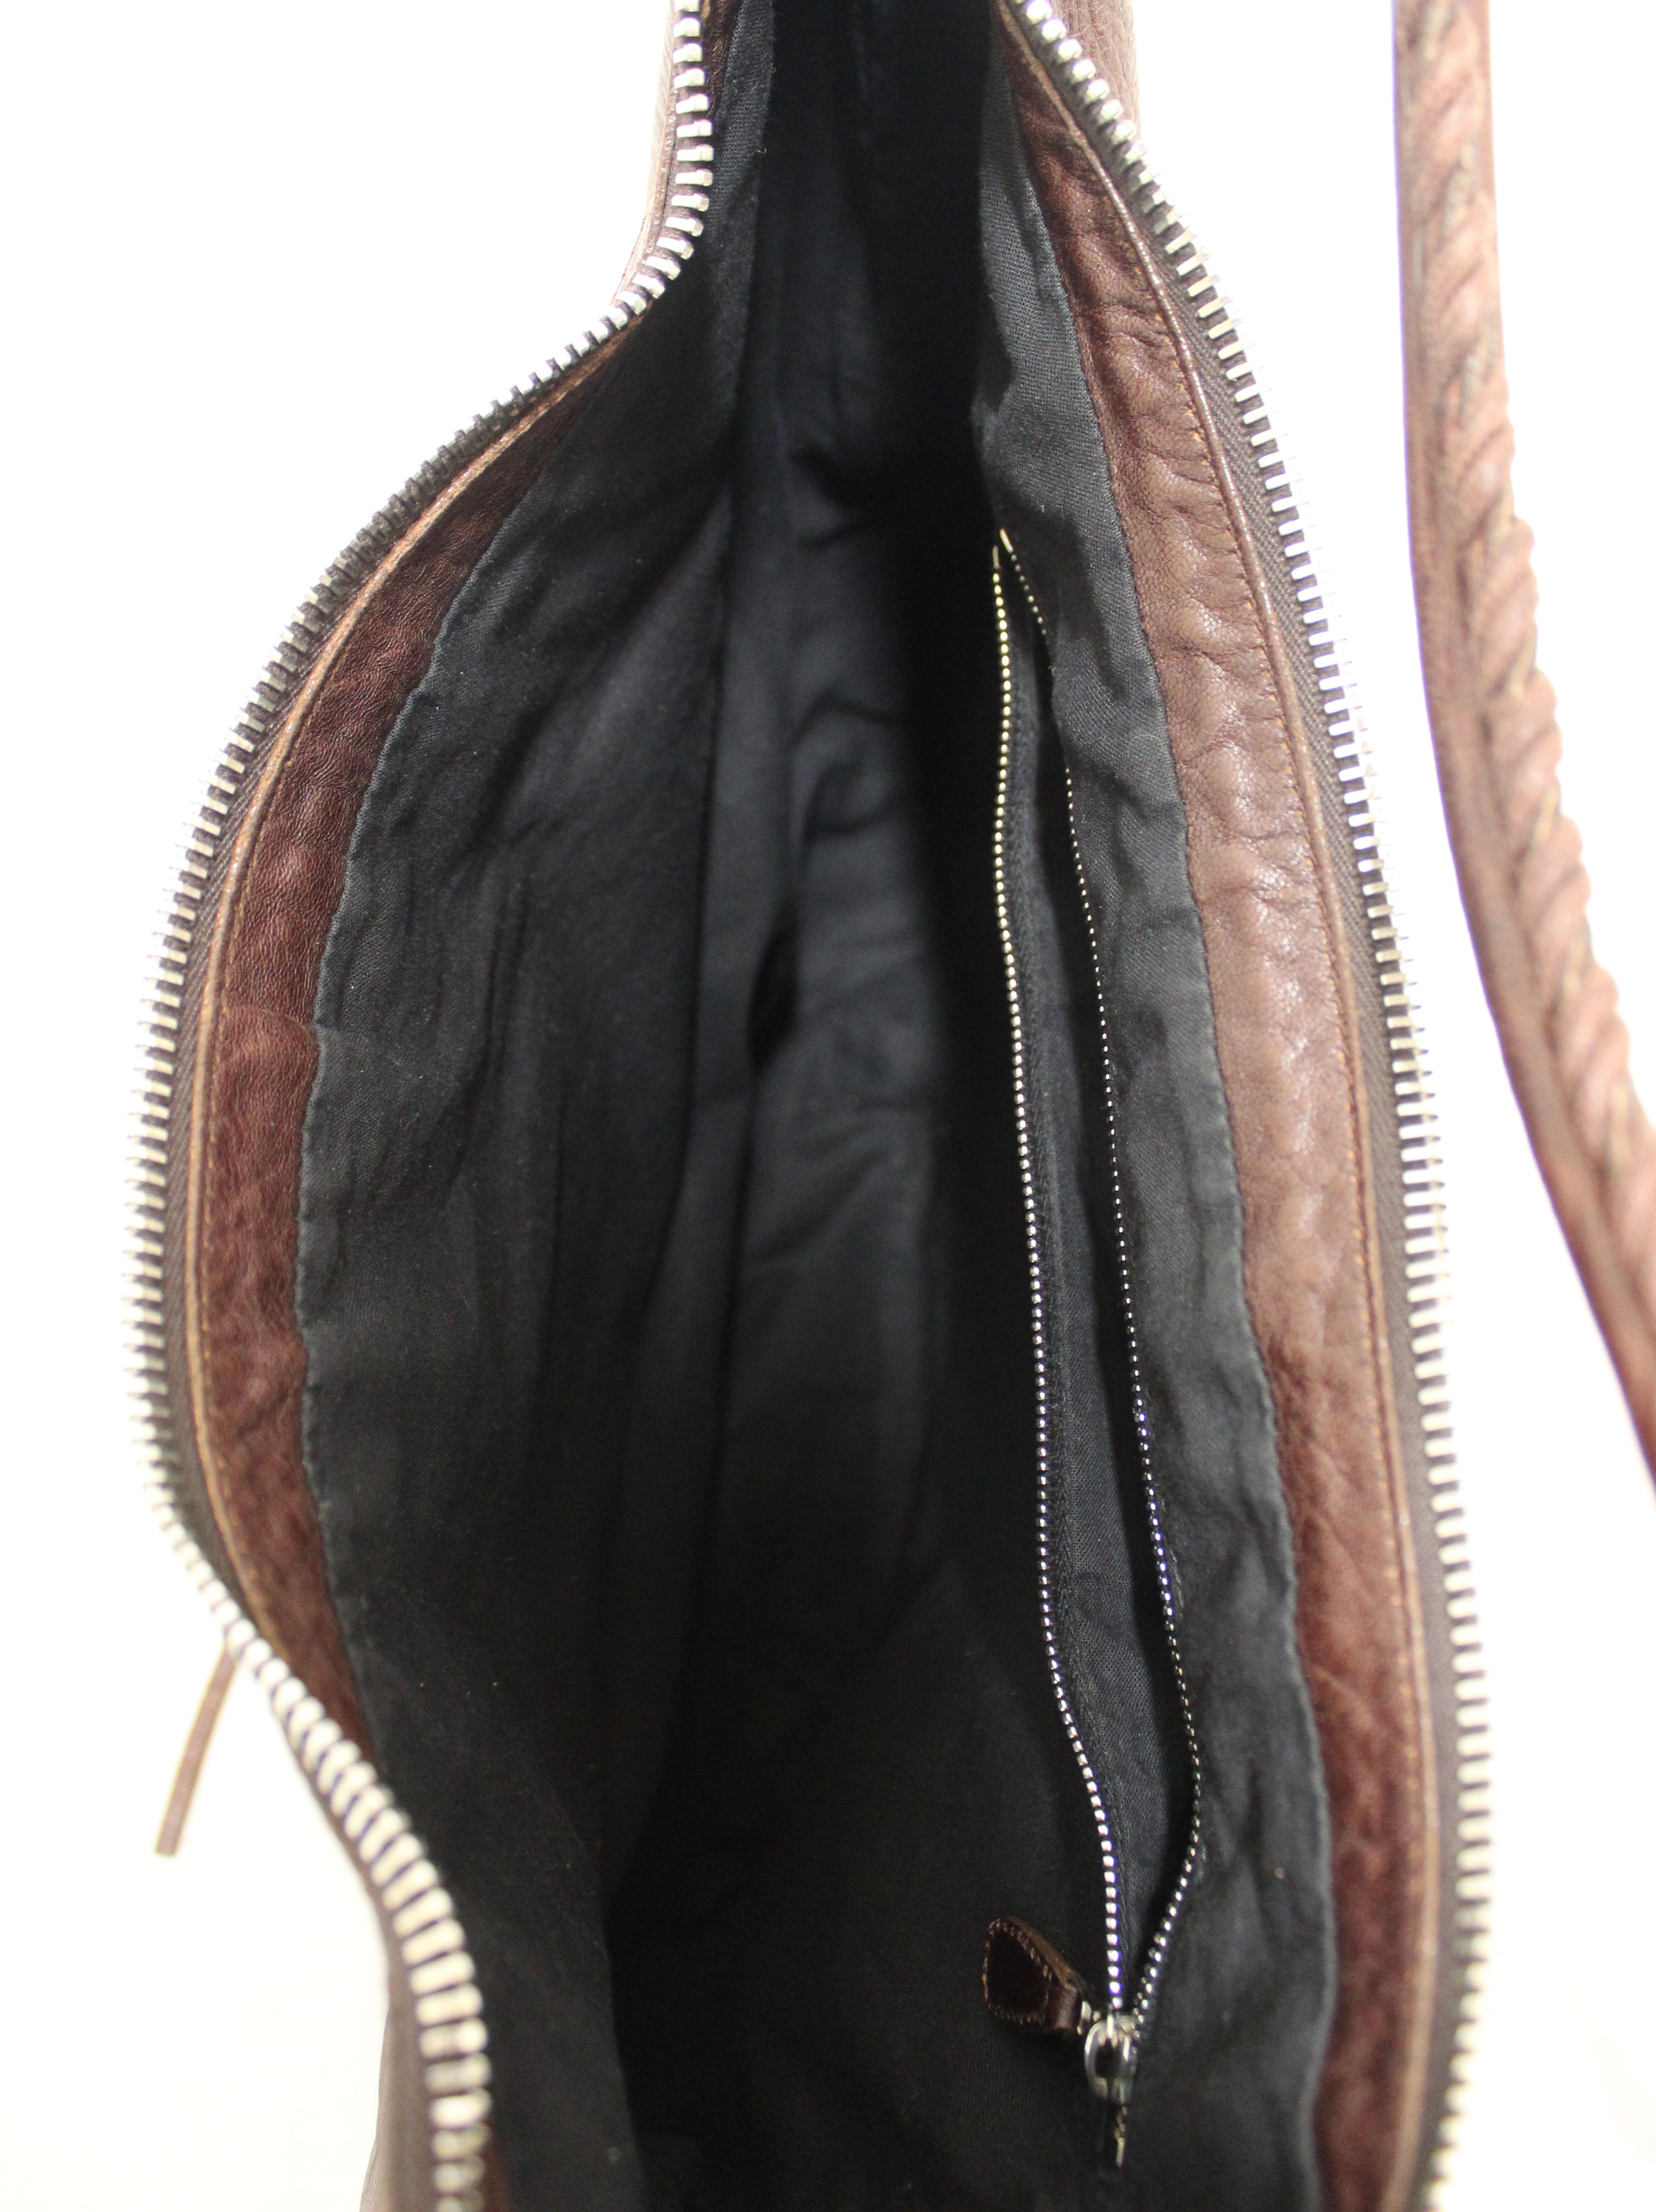 Authentic Balenciaga Brown Chevre Leather Giant 21 Hobo Bag